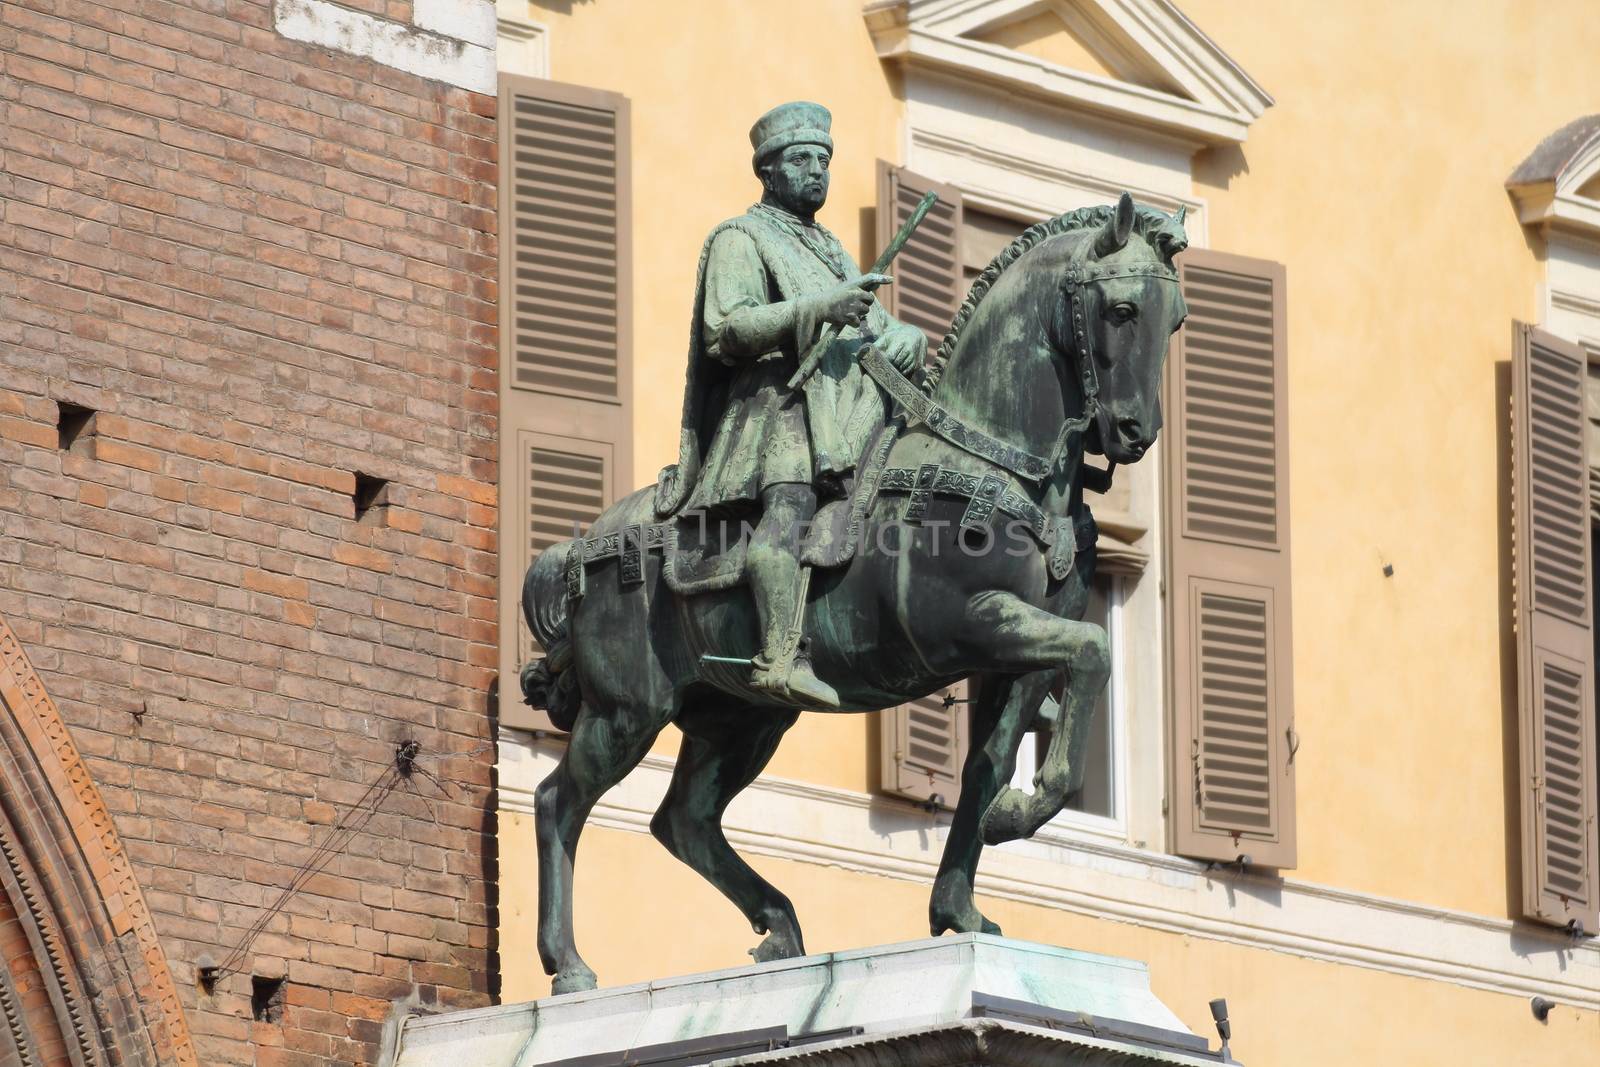 Duke Nicholas II d'Este greets the crowd from his horse. Statue